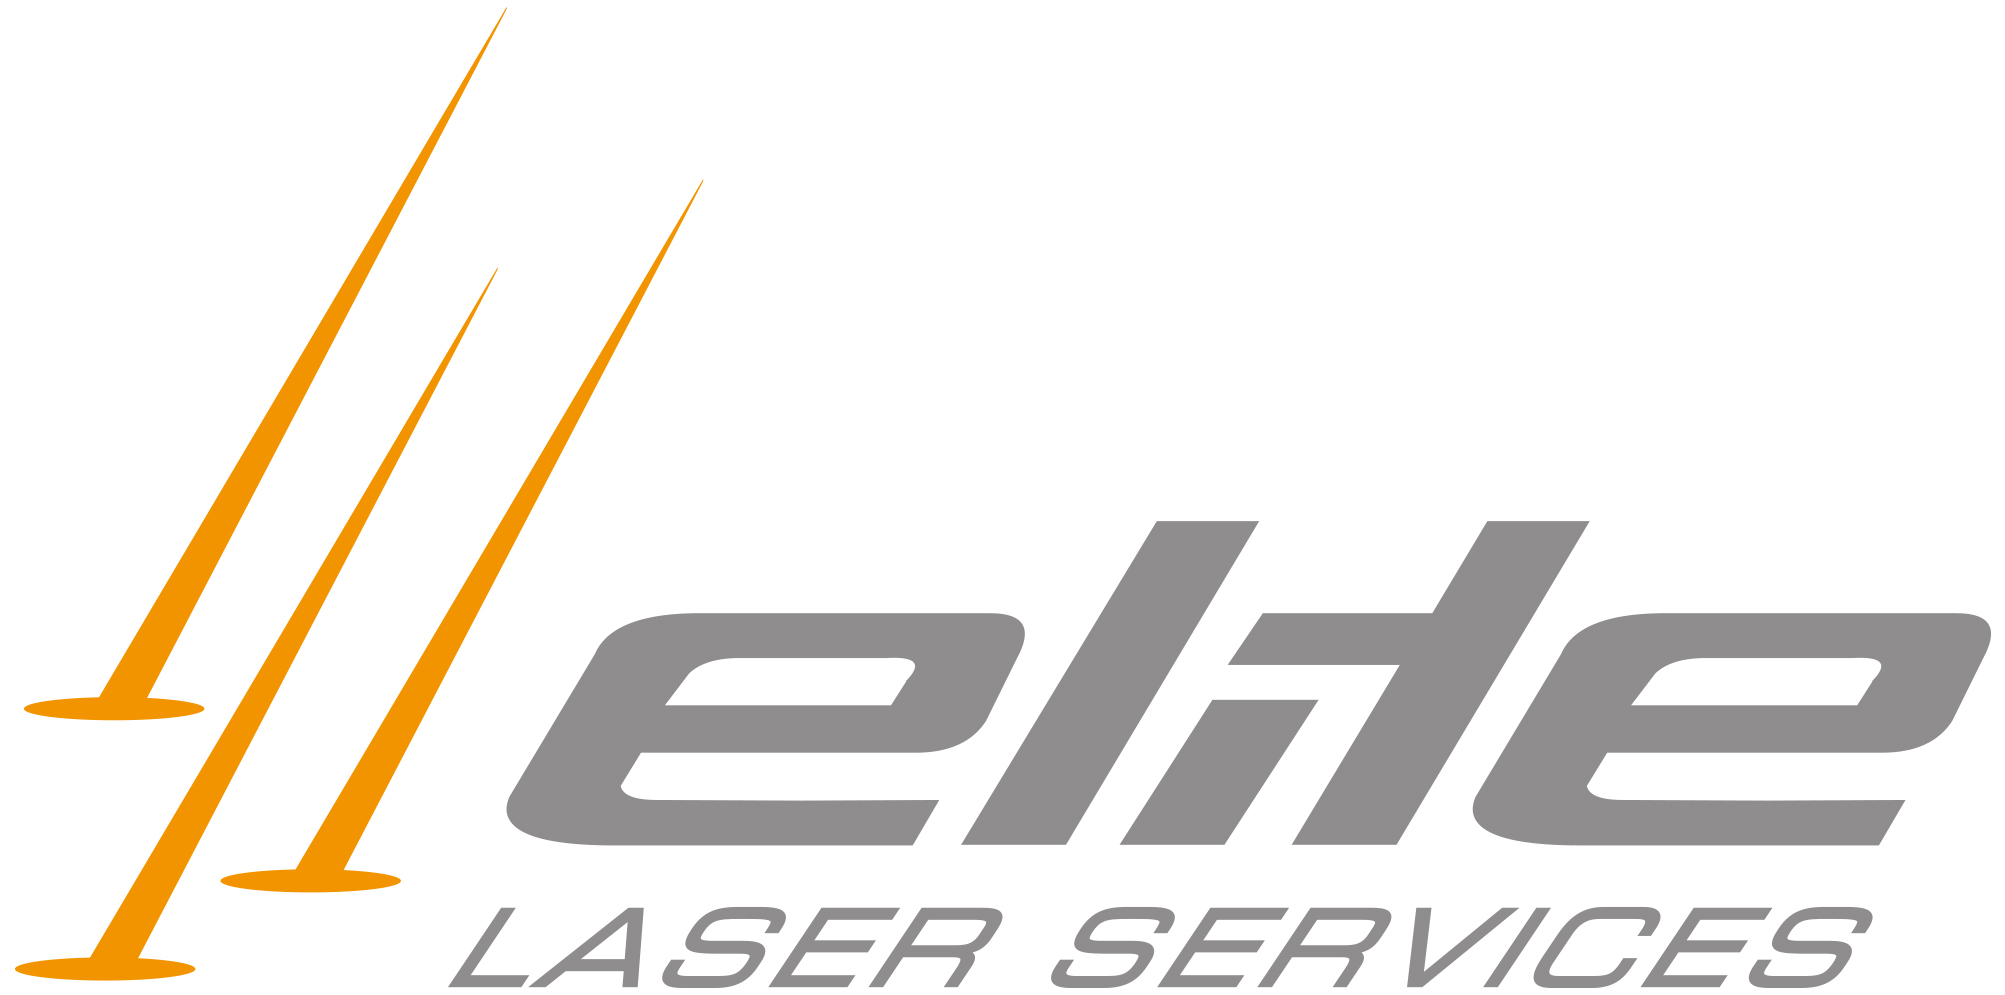 Elite Laser Services logo in grey